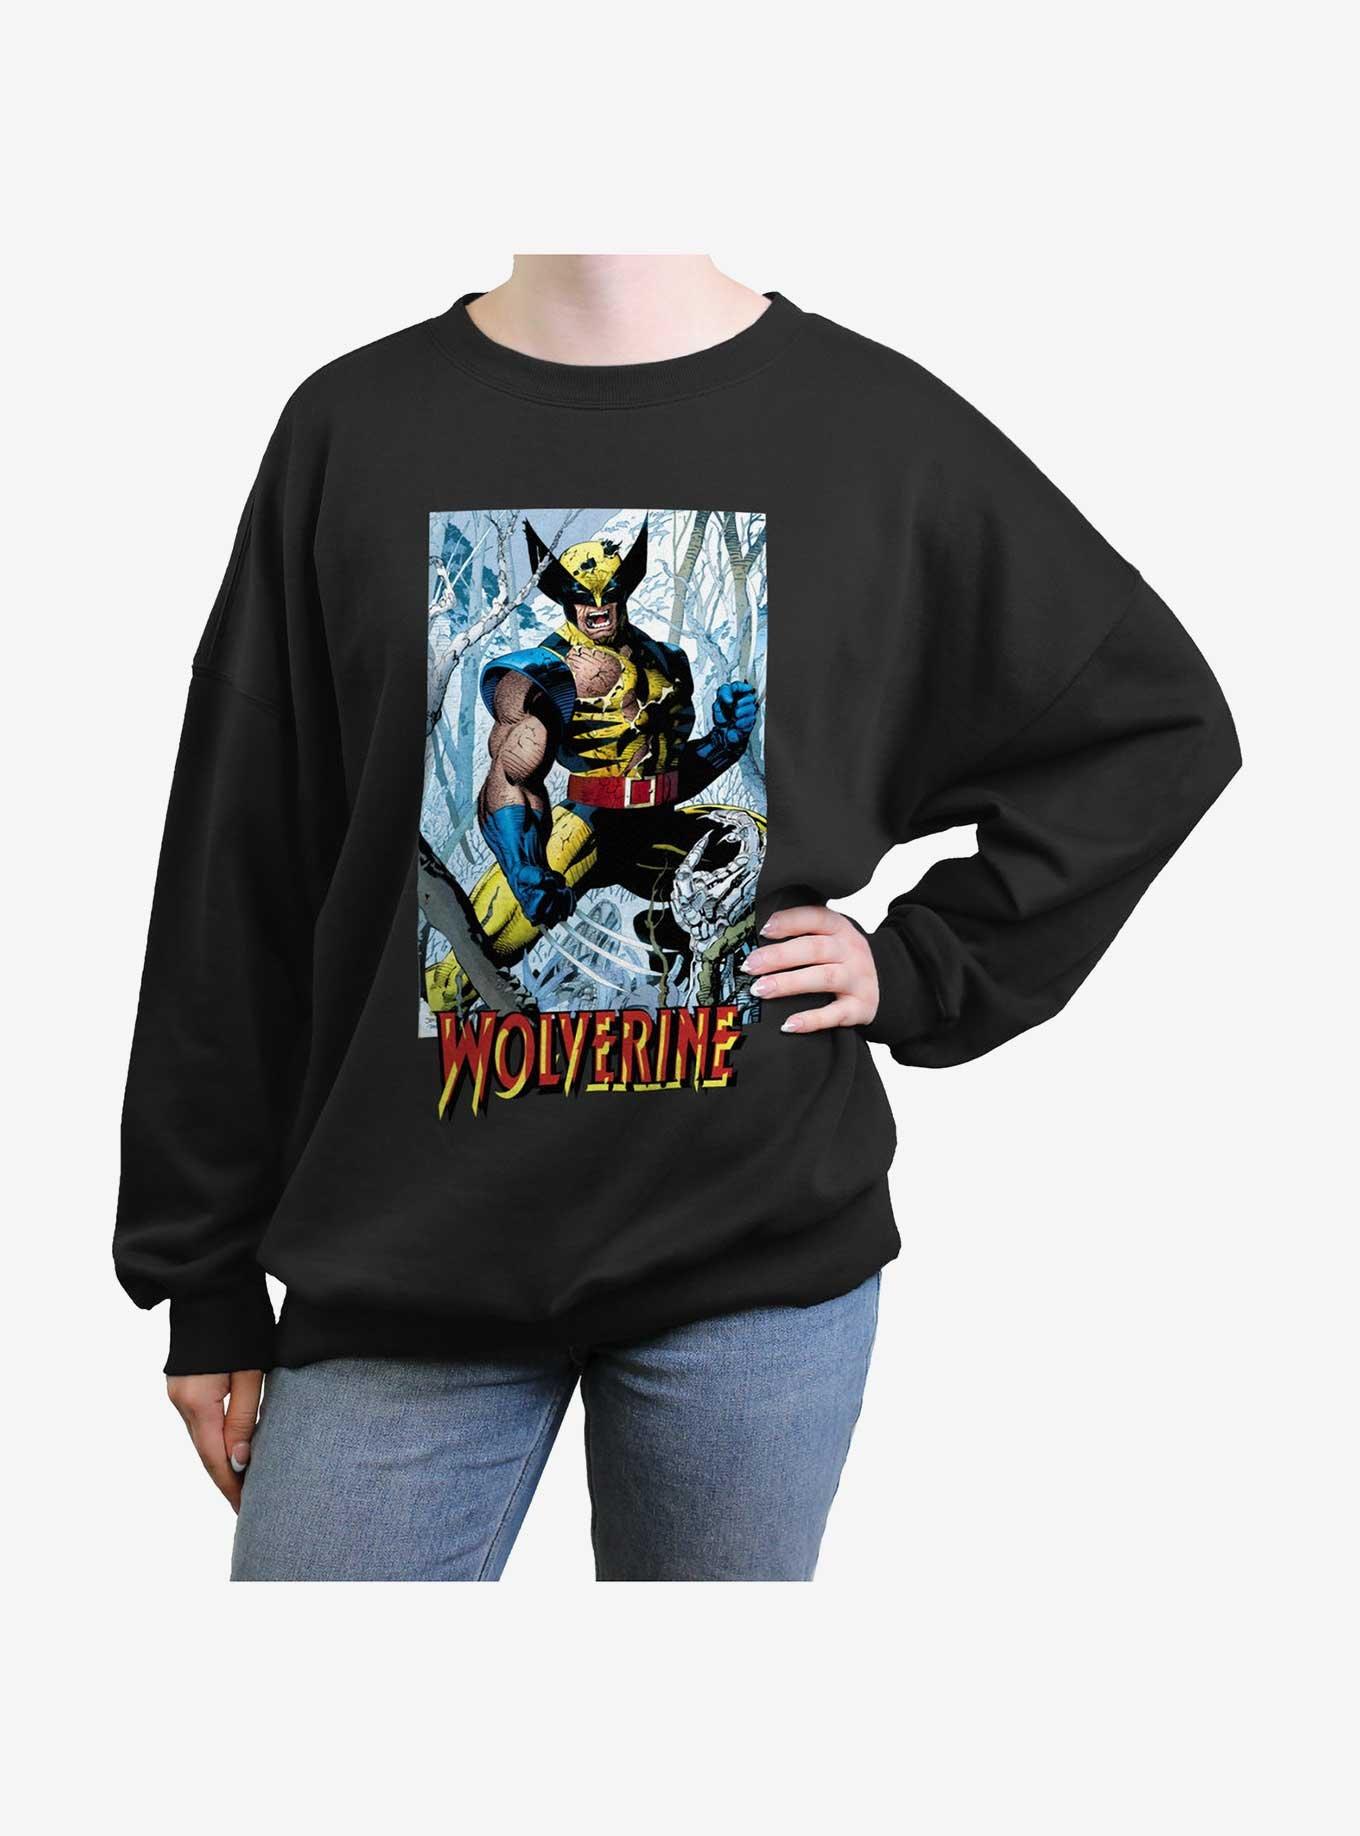 Wolverine Discipline 22 From Then Til Now Trading Card Womens Oversized Sweatshirt, BLACK, hi-res